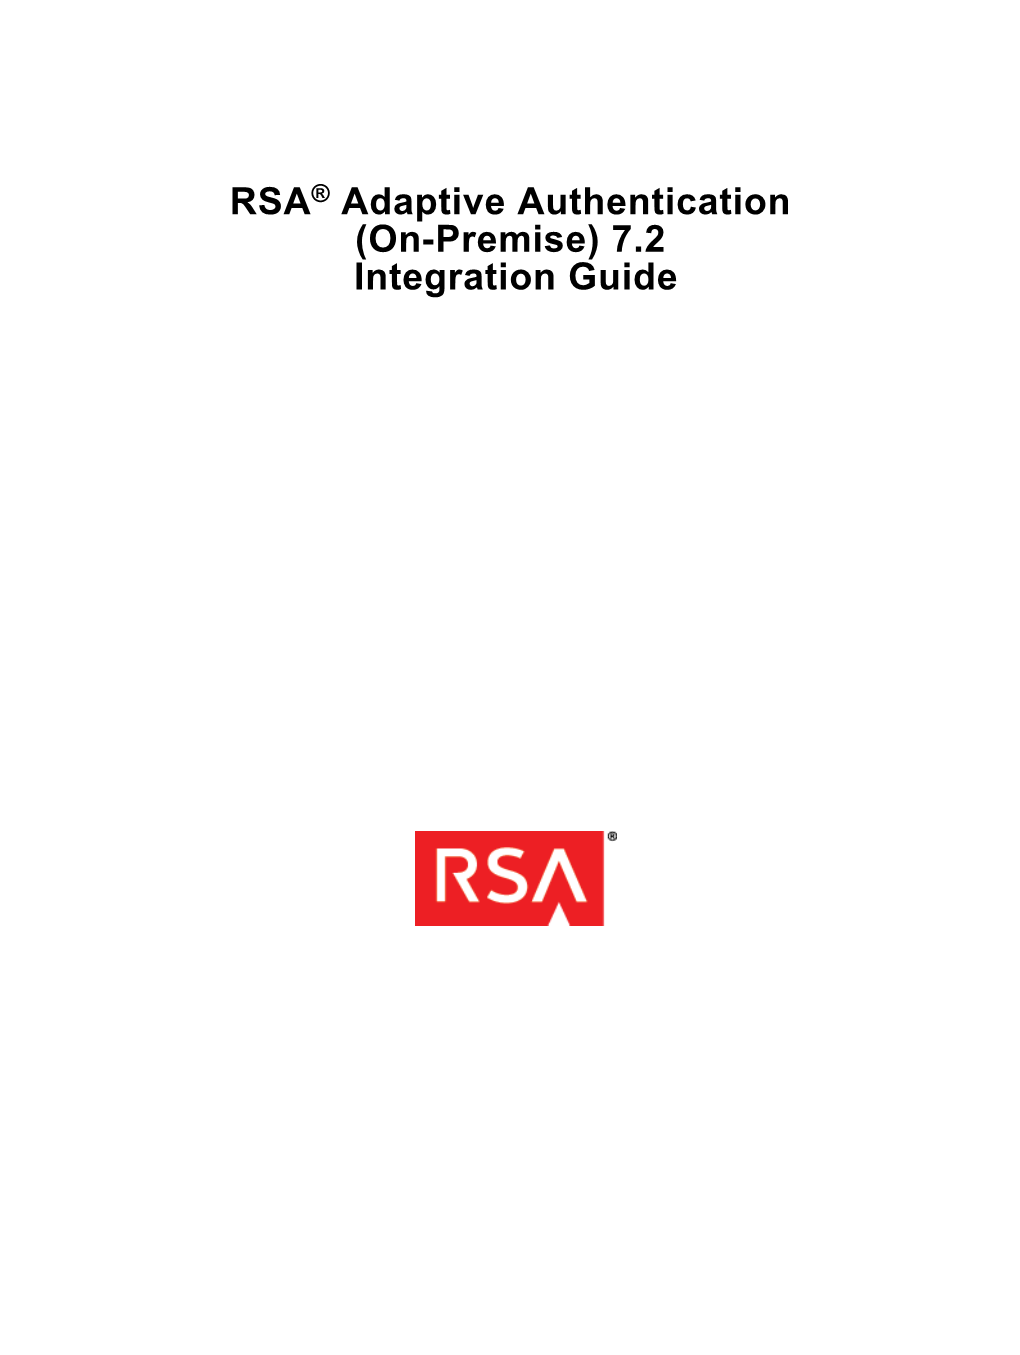 RSA Adaptive Authentication (On-Premise) 7.2 Integration Guide